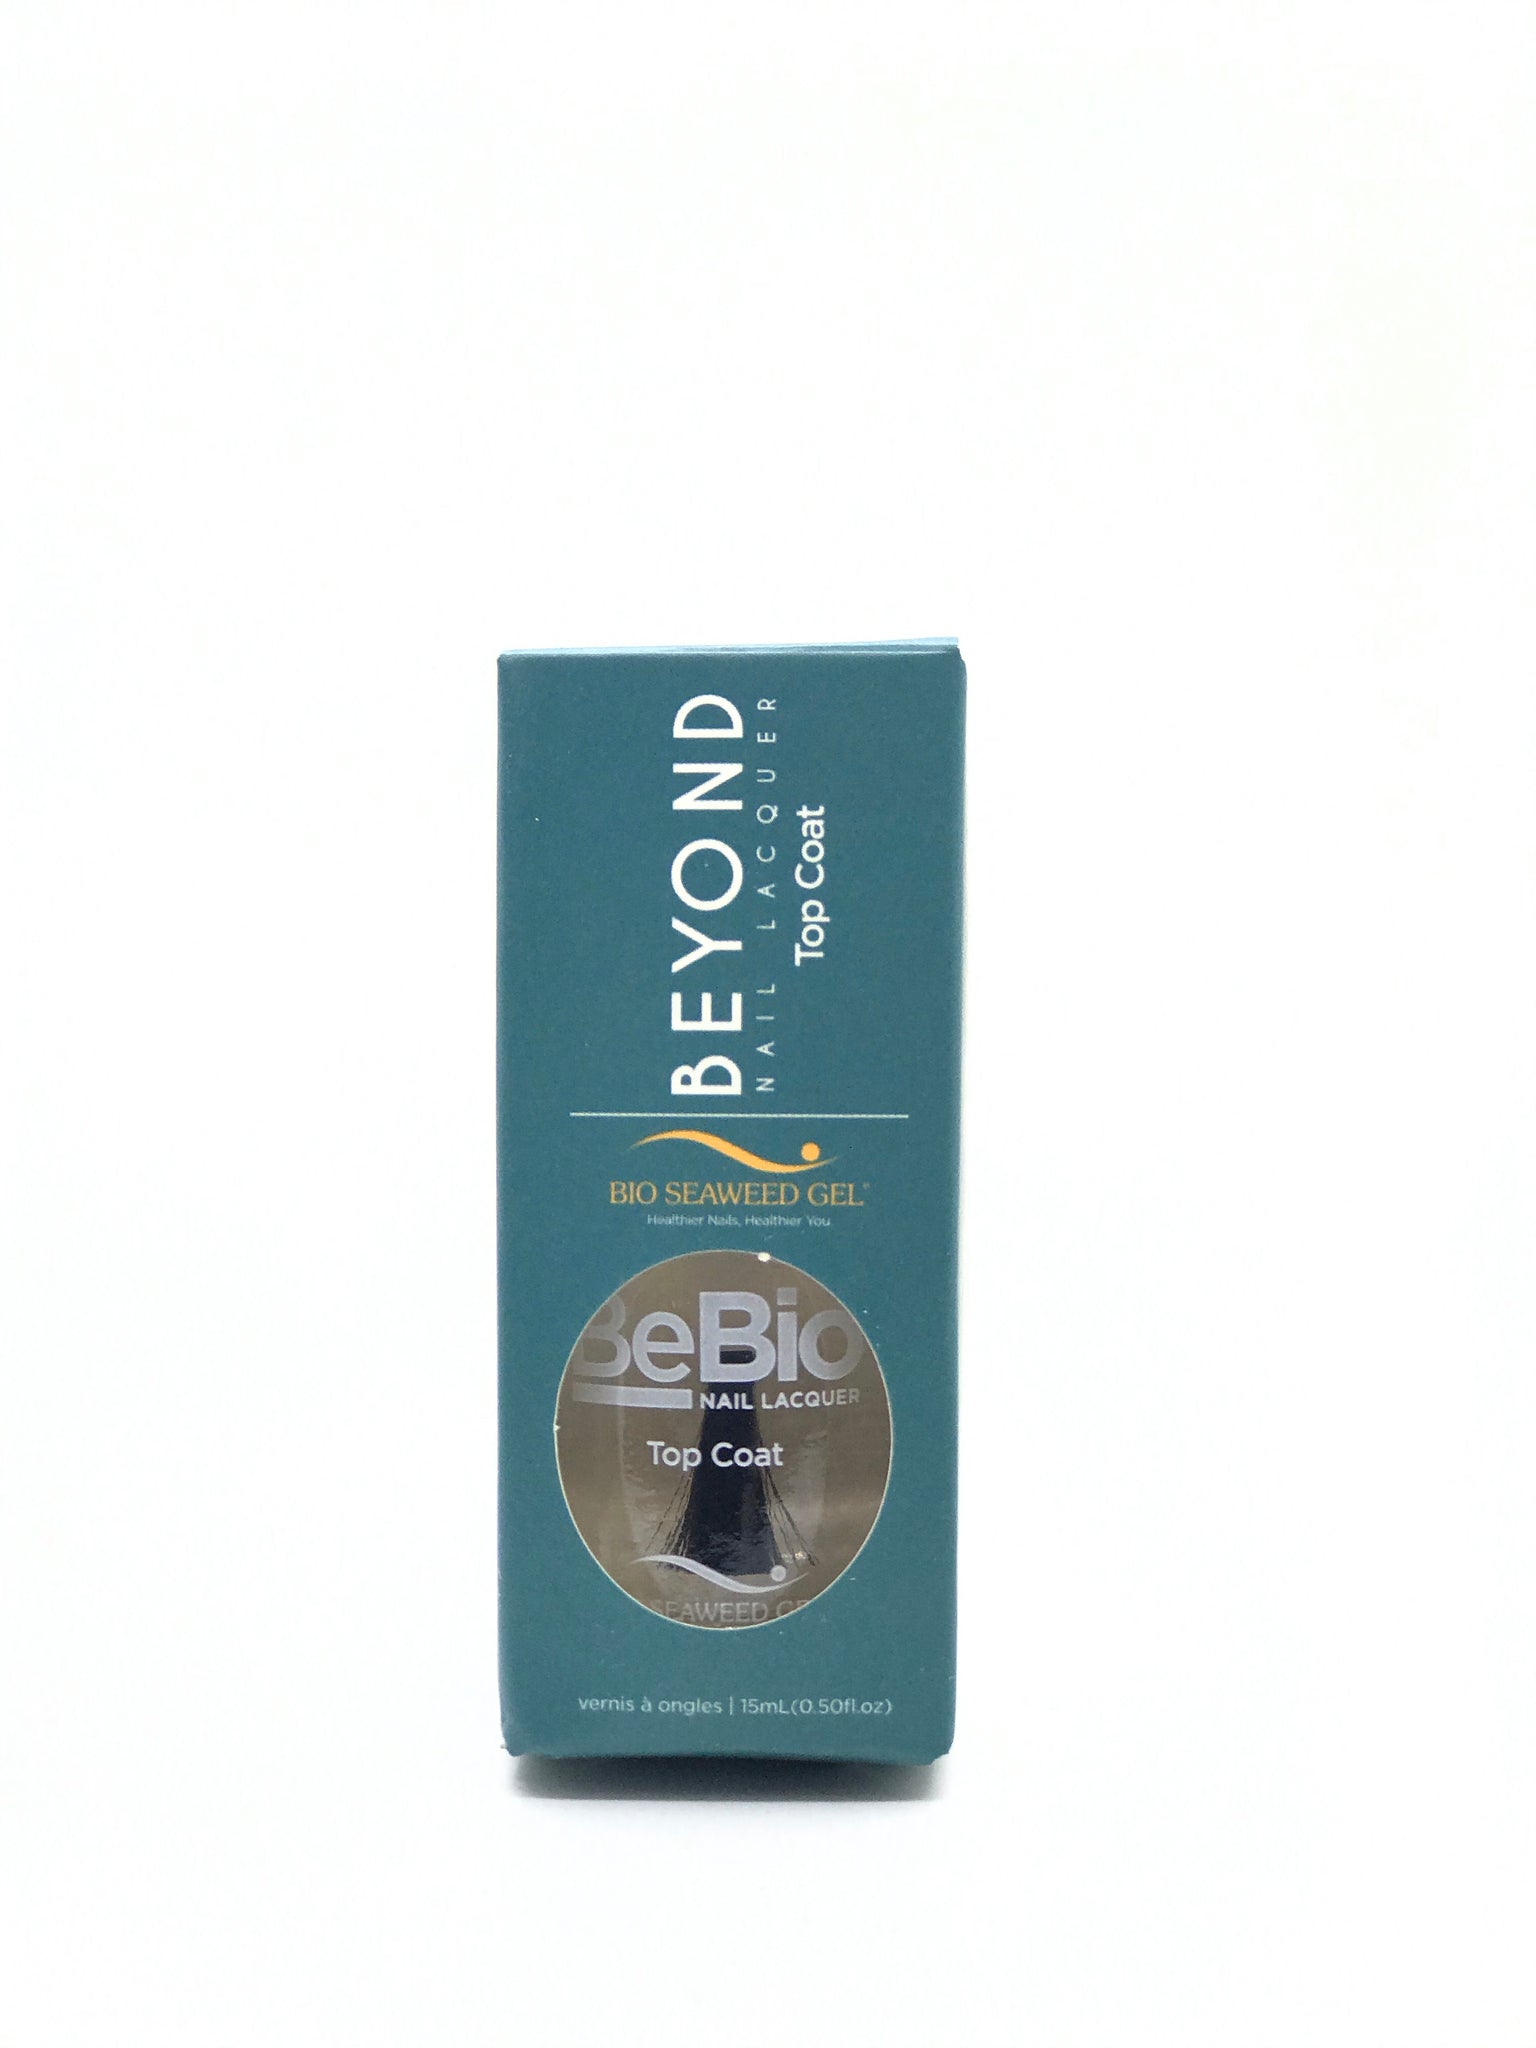 BeBio Nail Lacquer- Top Coat | Bio Seaweed Gel®